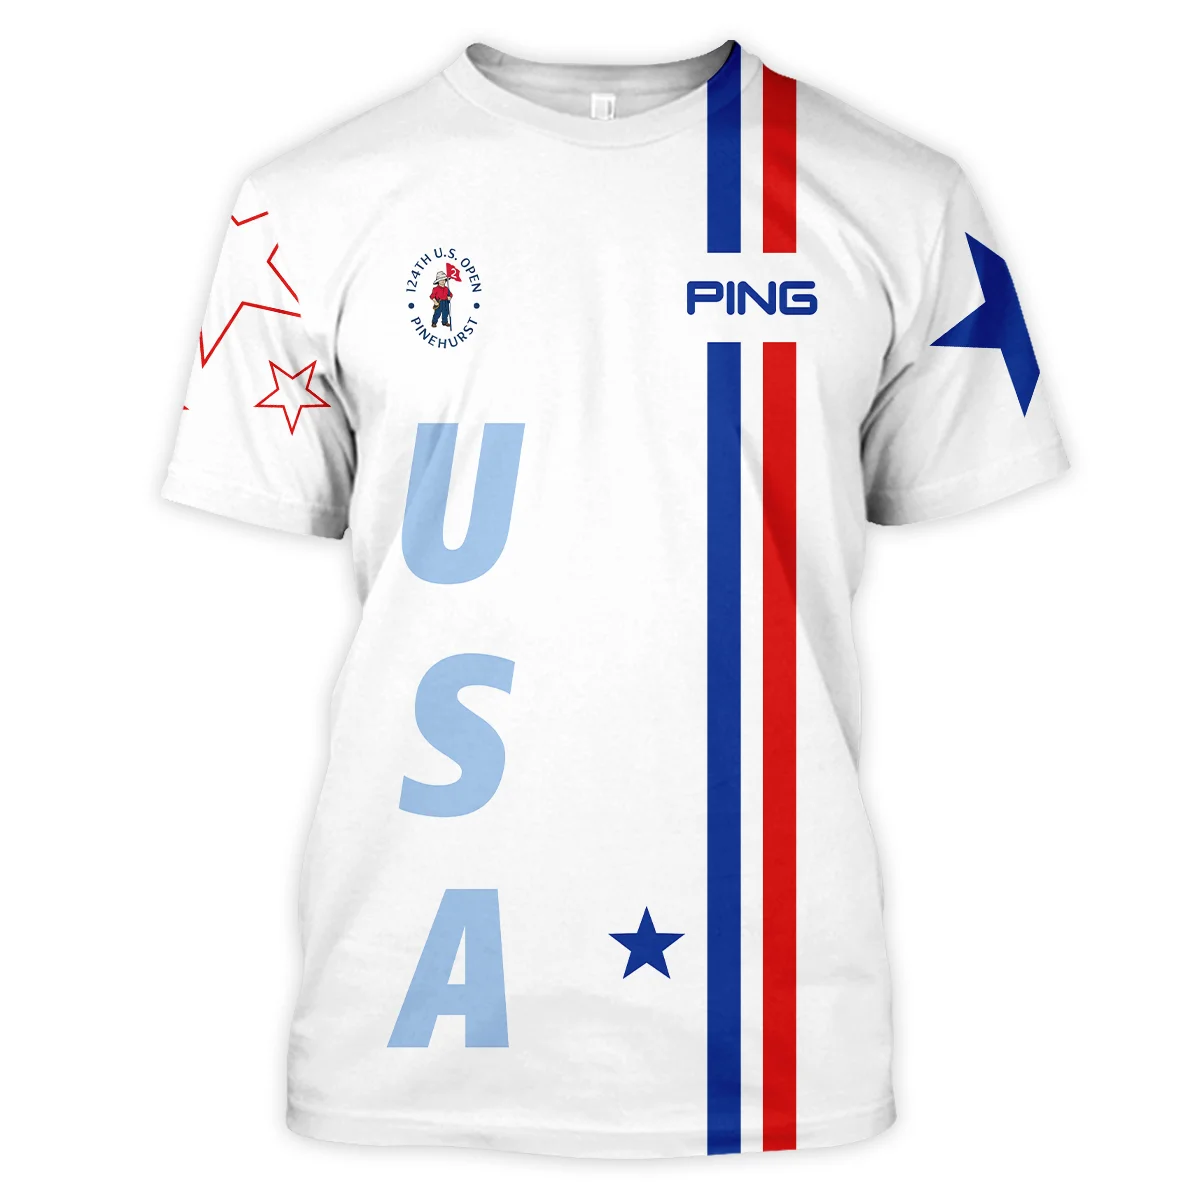 124th U.S. Open Pinehurst Ping Blue Red Line White Vneck Polo Shirt Style Classic Polo Shirt For Men